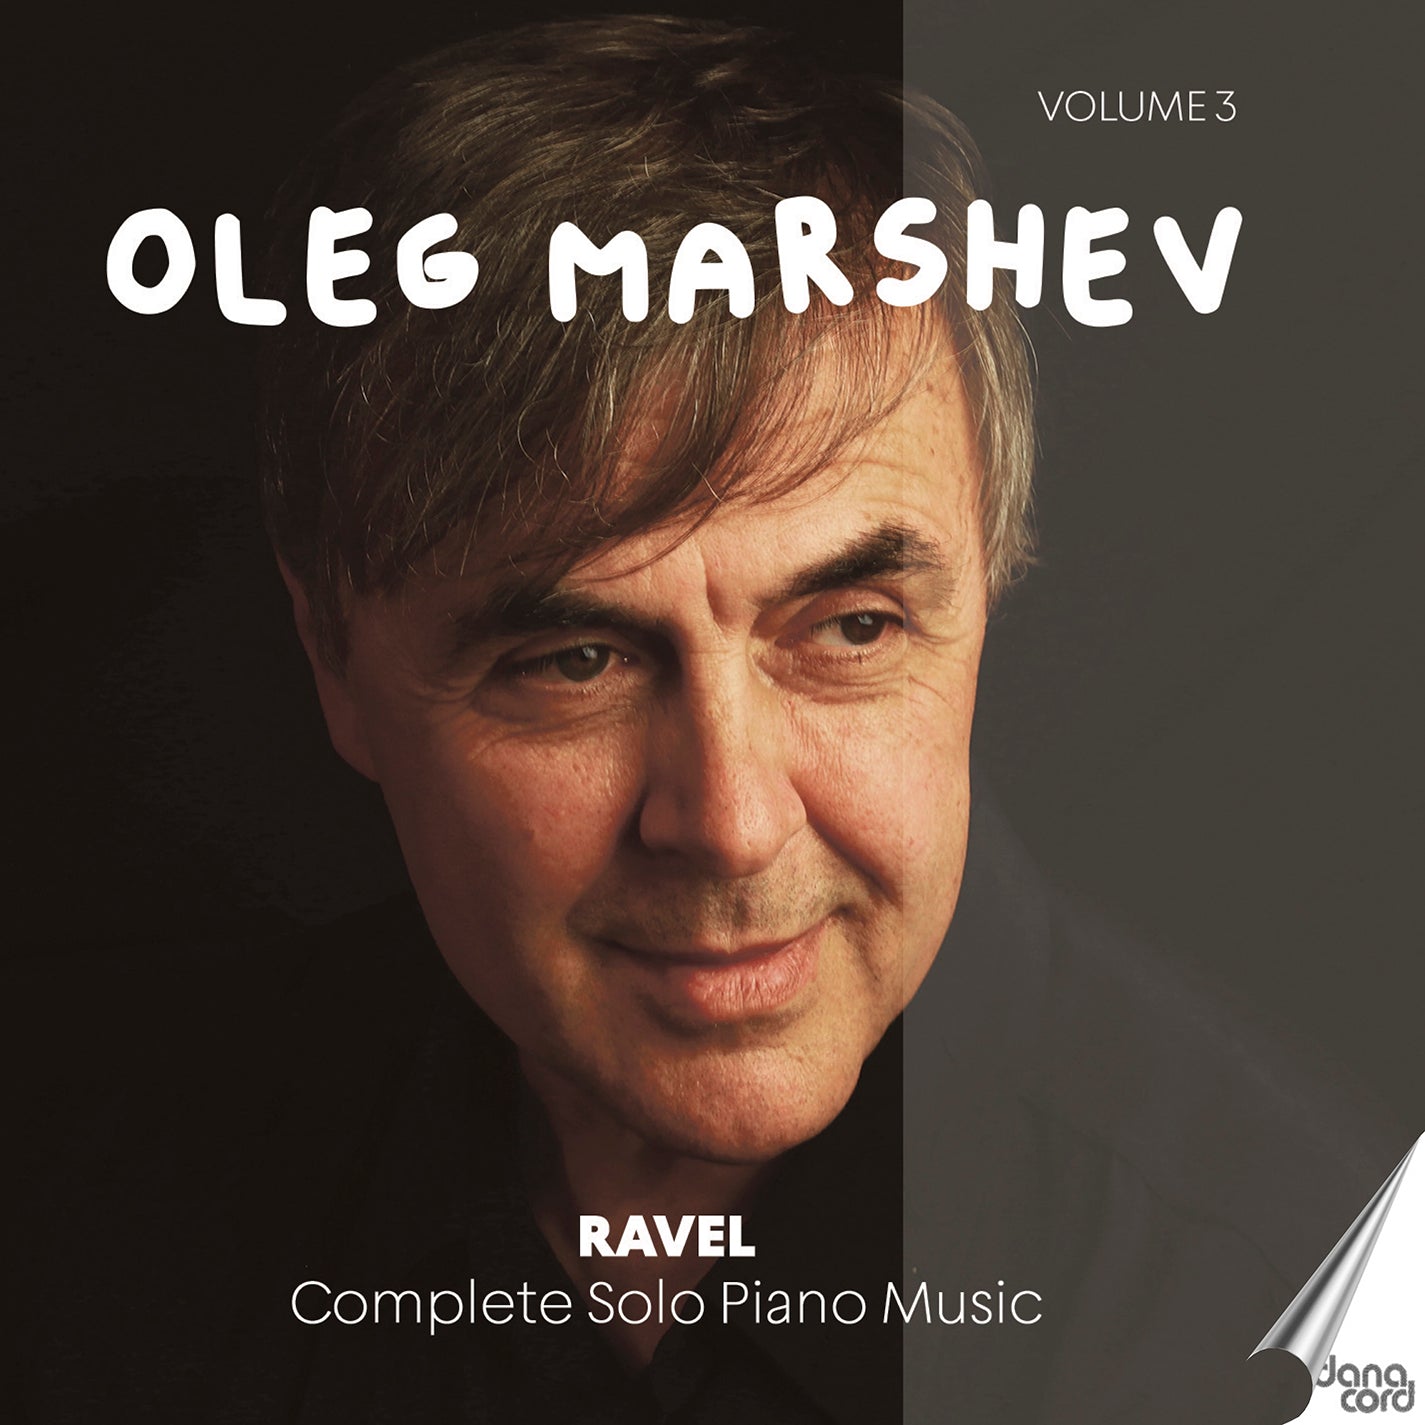 Ravel: Complete Solo Piano Music, Vol. 3 / Marshev